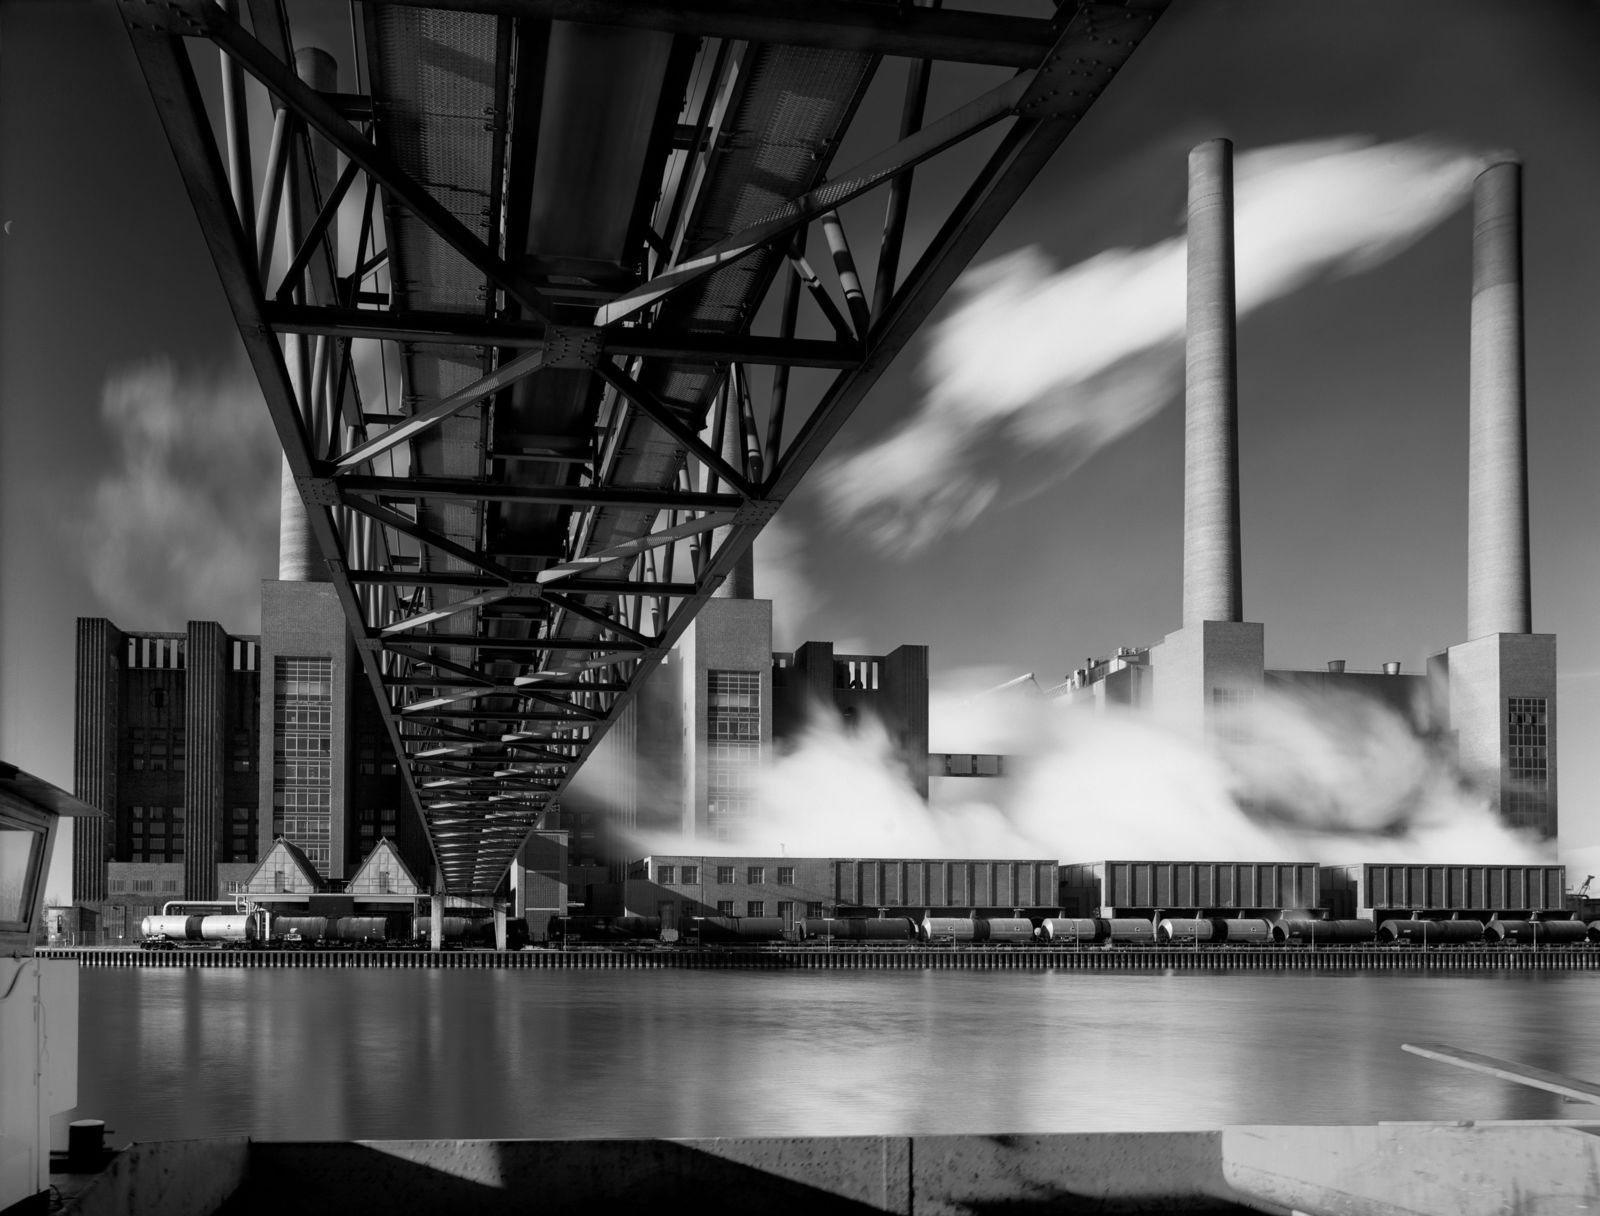 Symbolising an entire industrial region: Heidersberger’s photography “Kraftwerk der Volkswagen AG” turns 50